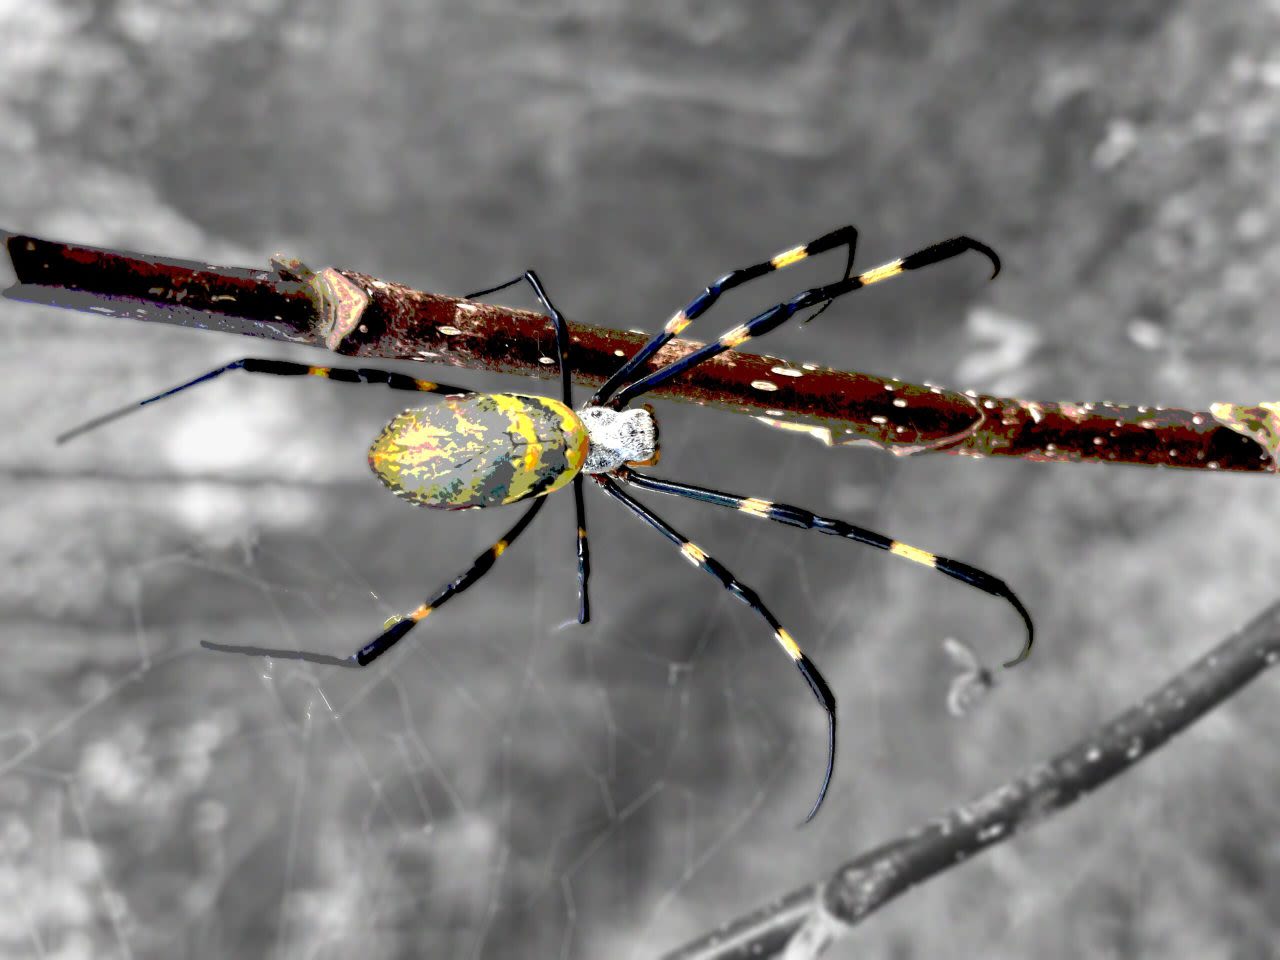 Giant, ‘flying’ Joro spiders expanding in East Coast